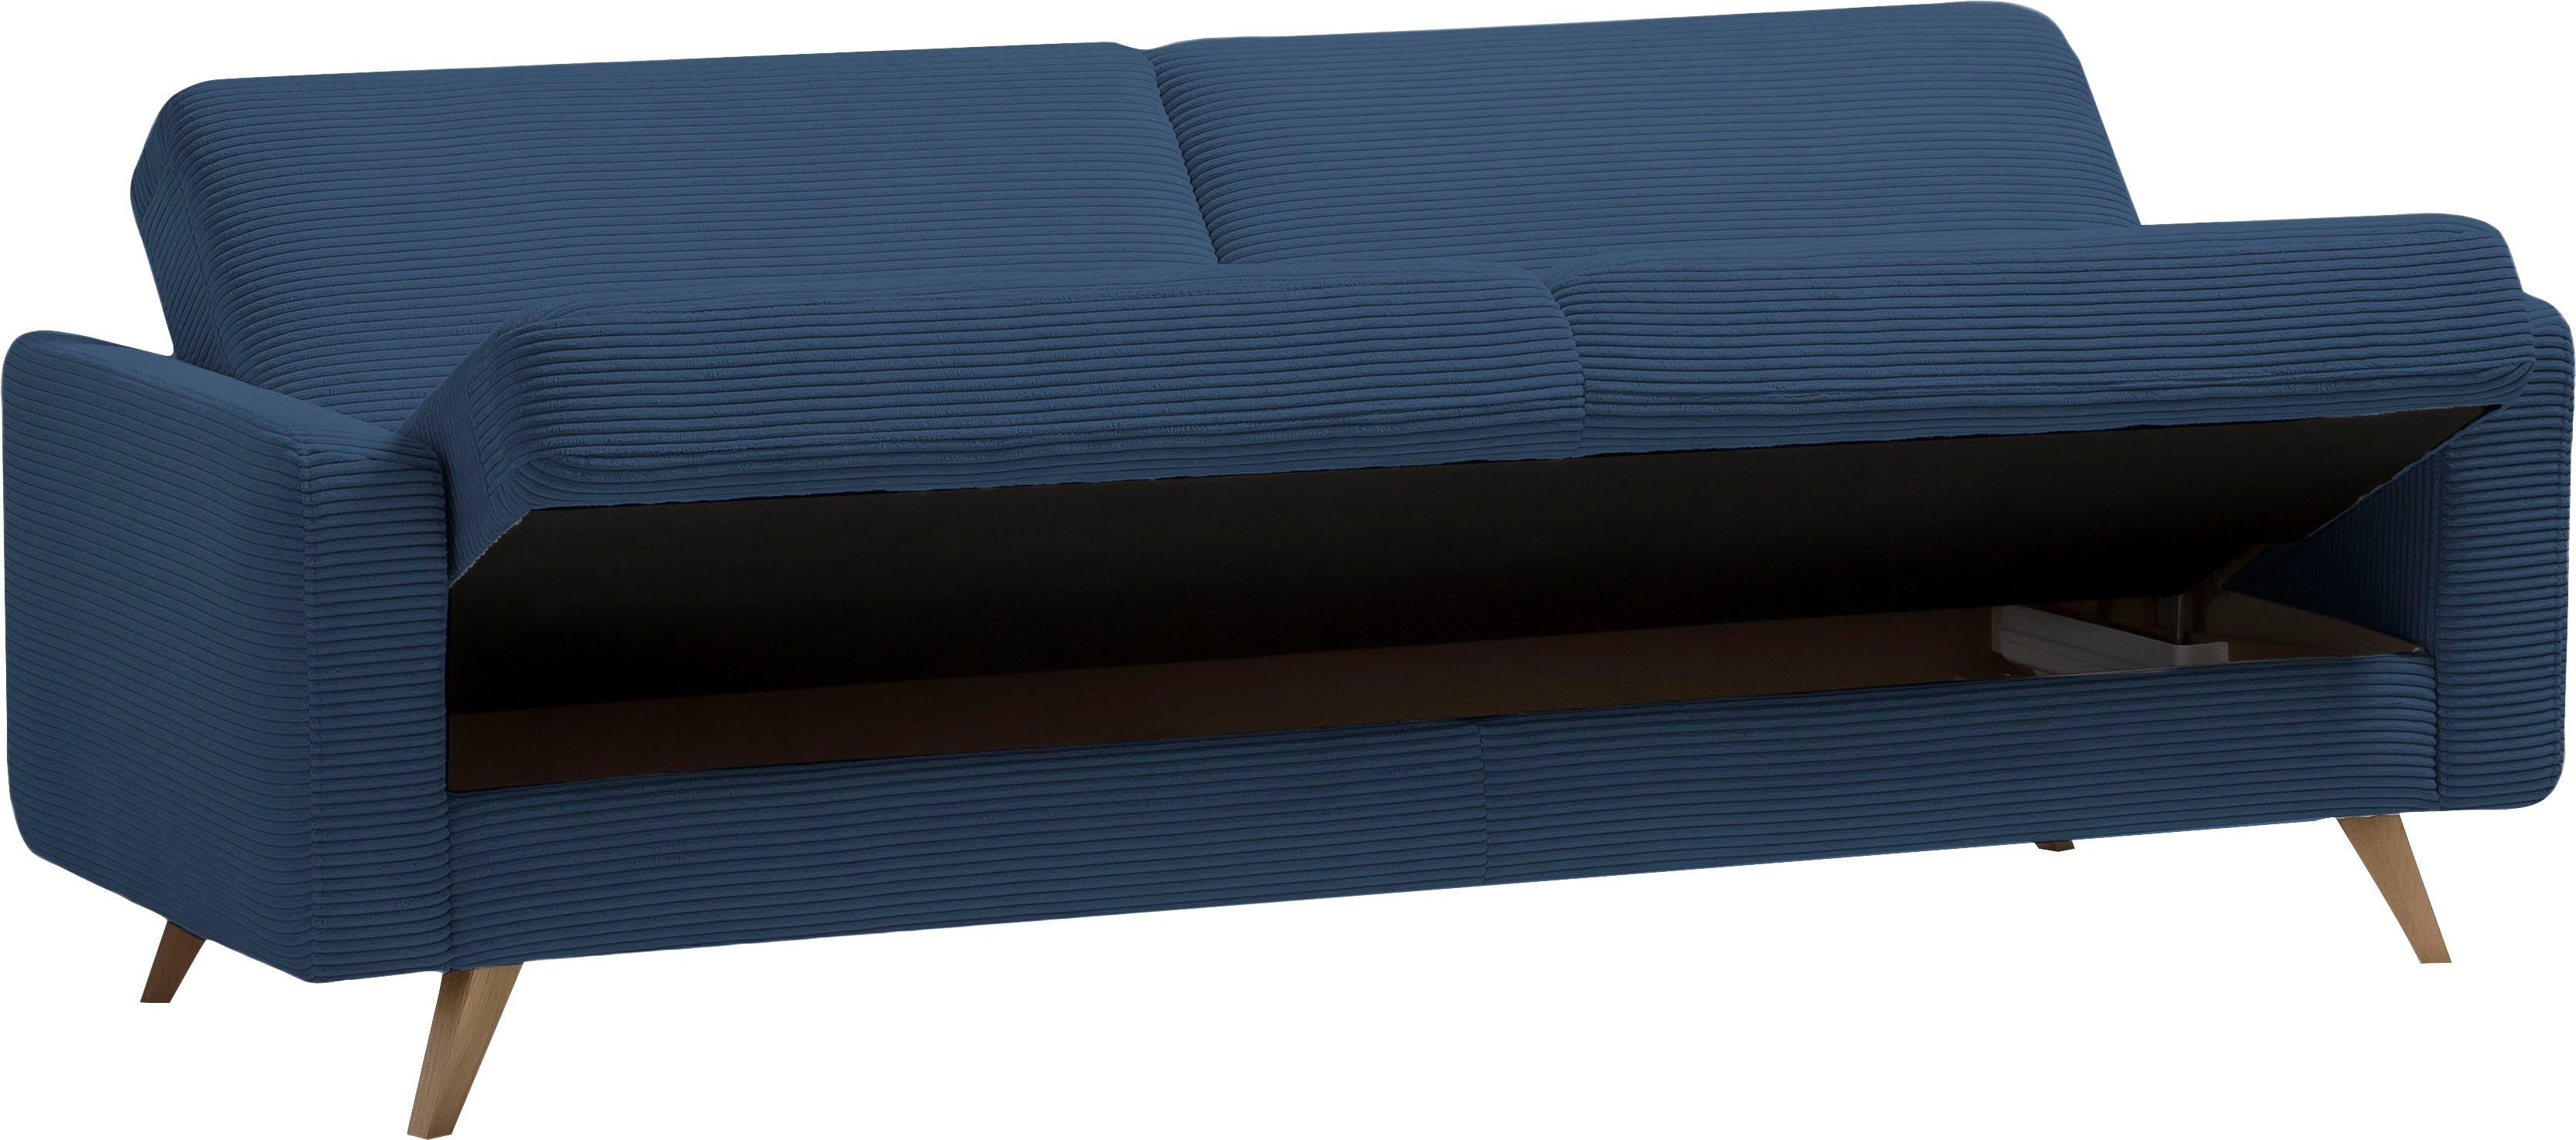 sofa Bettkasten Samso, - Inklusive und fashion 3-Sitzer Bettfunktion navy exxpo